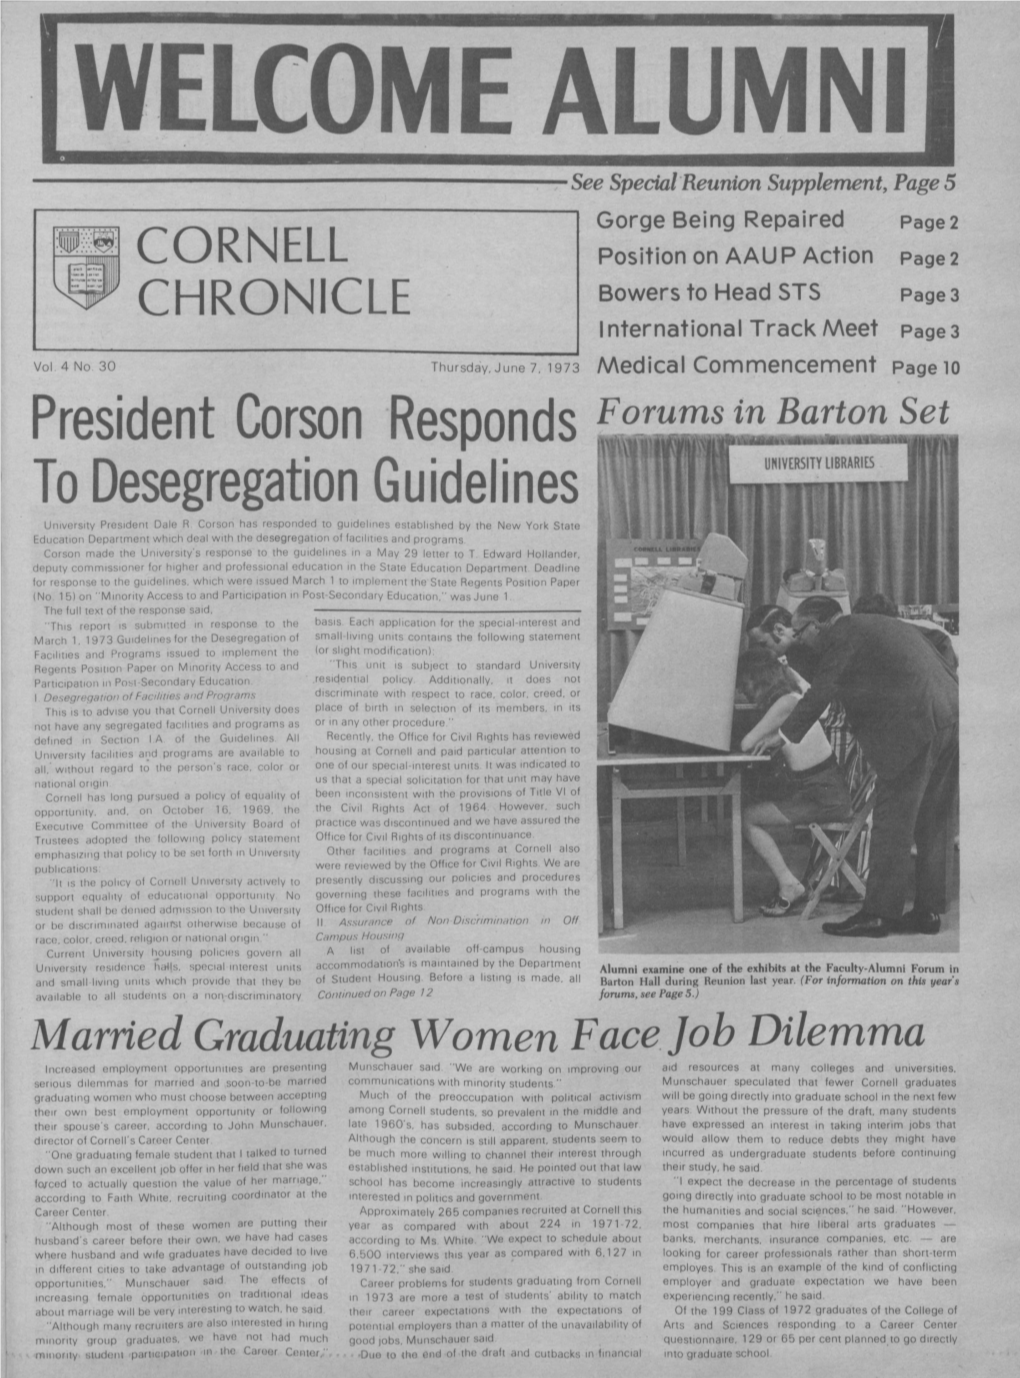 President Corson Responds to Desegregation Guidelines